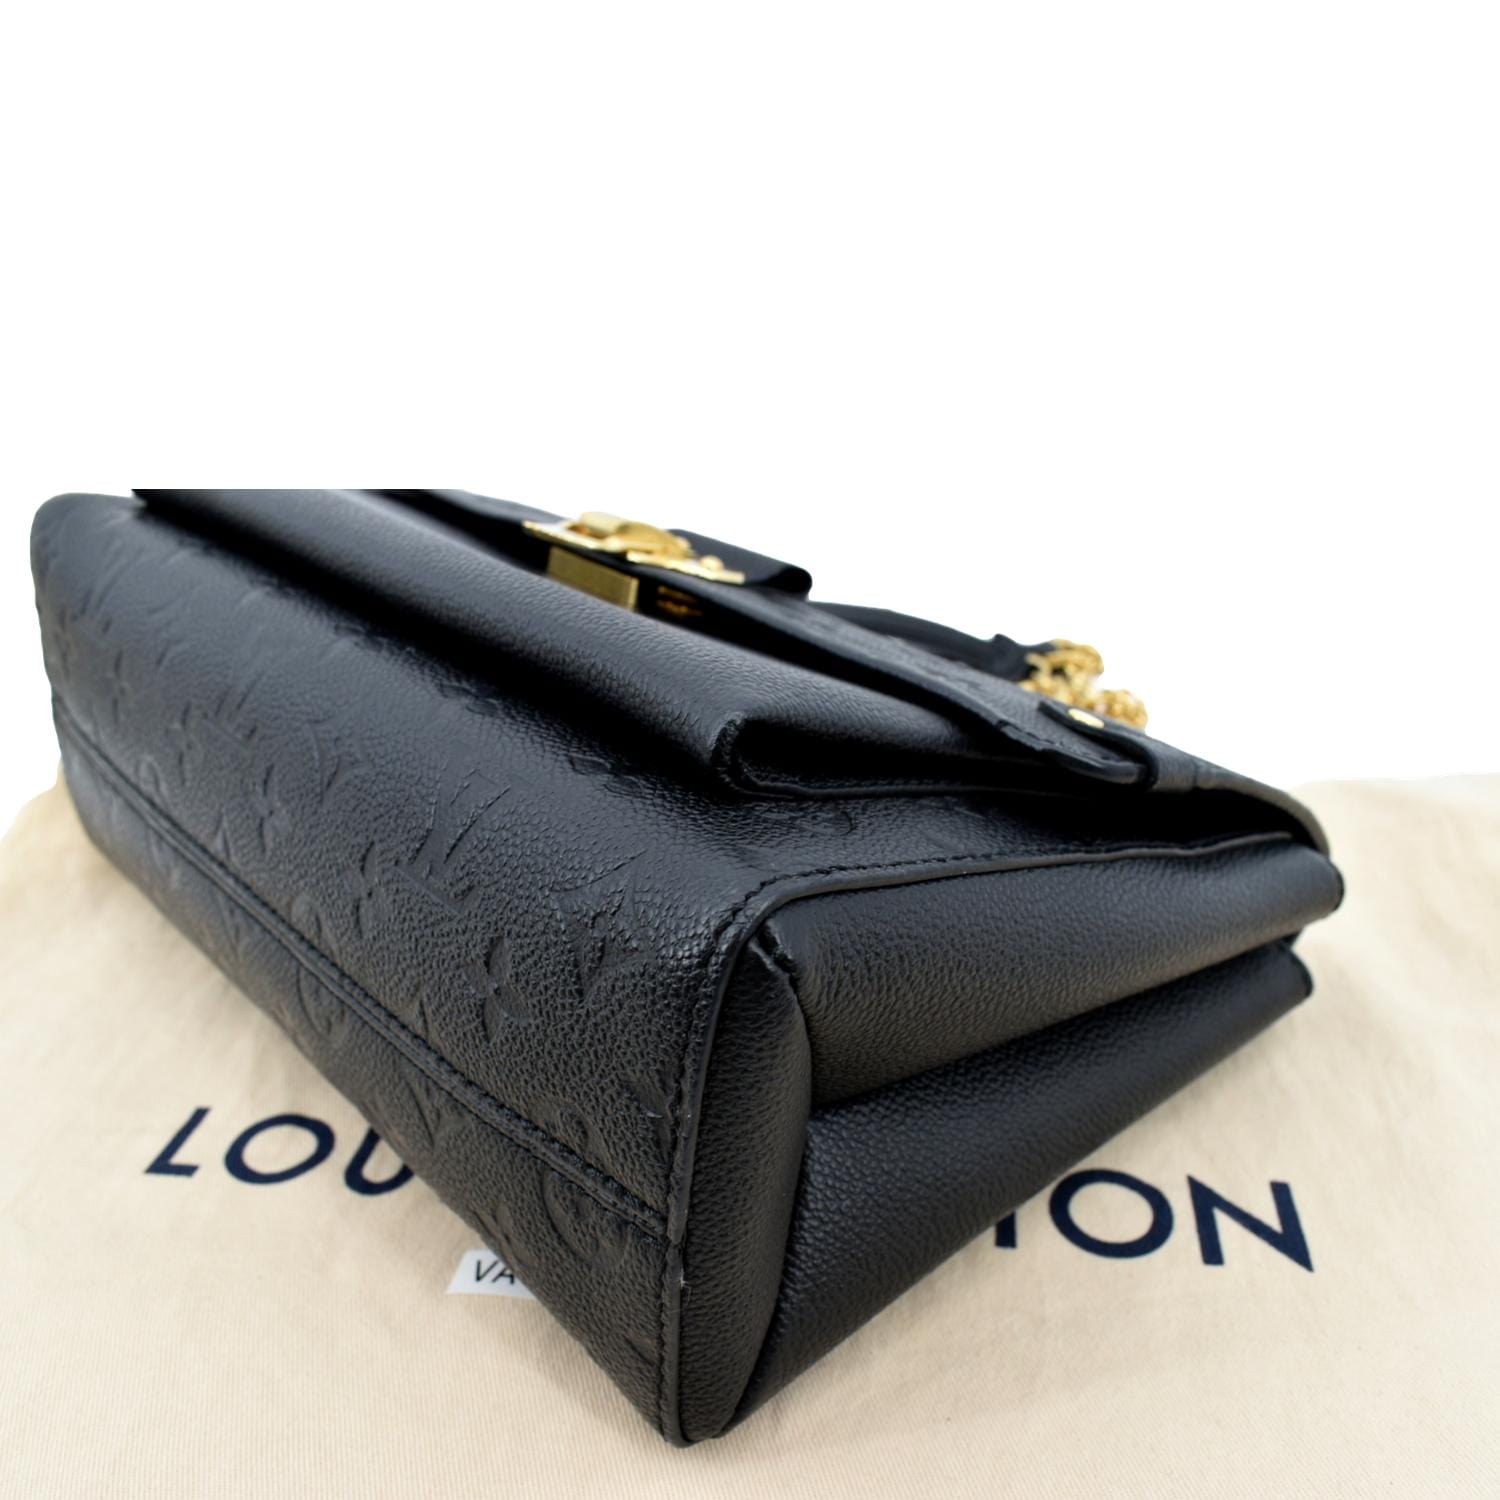 Louis Vuitton Vavin PM Black Monogram Empreinte